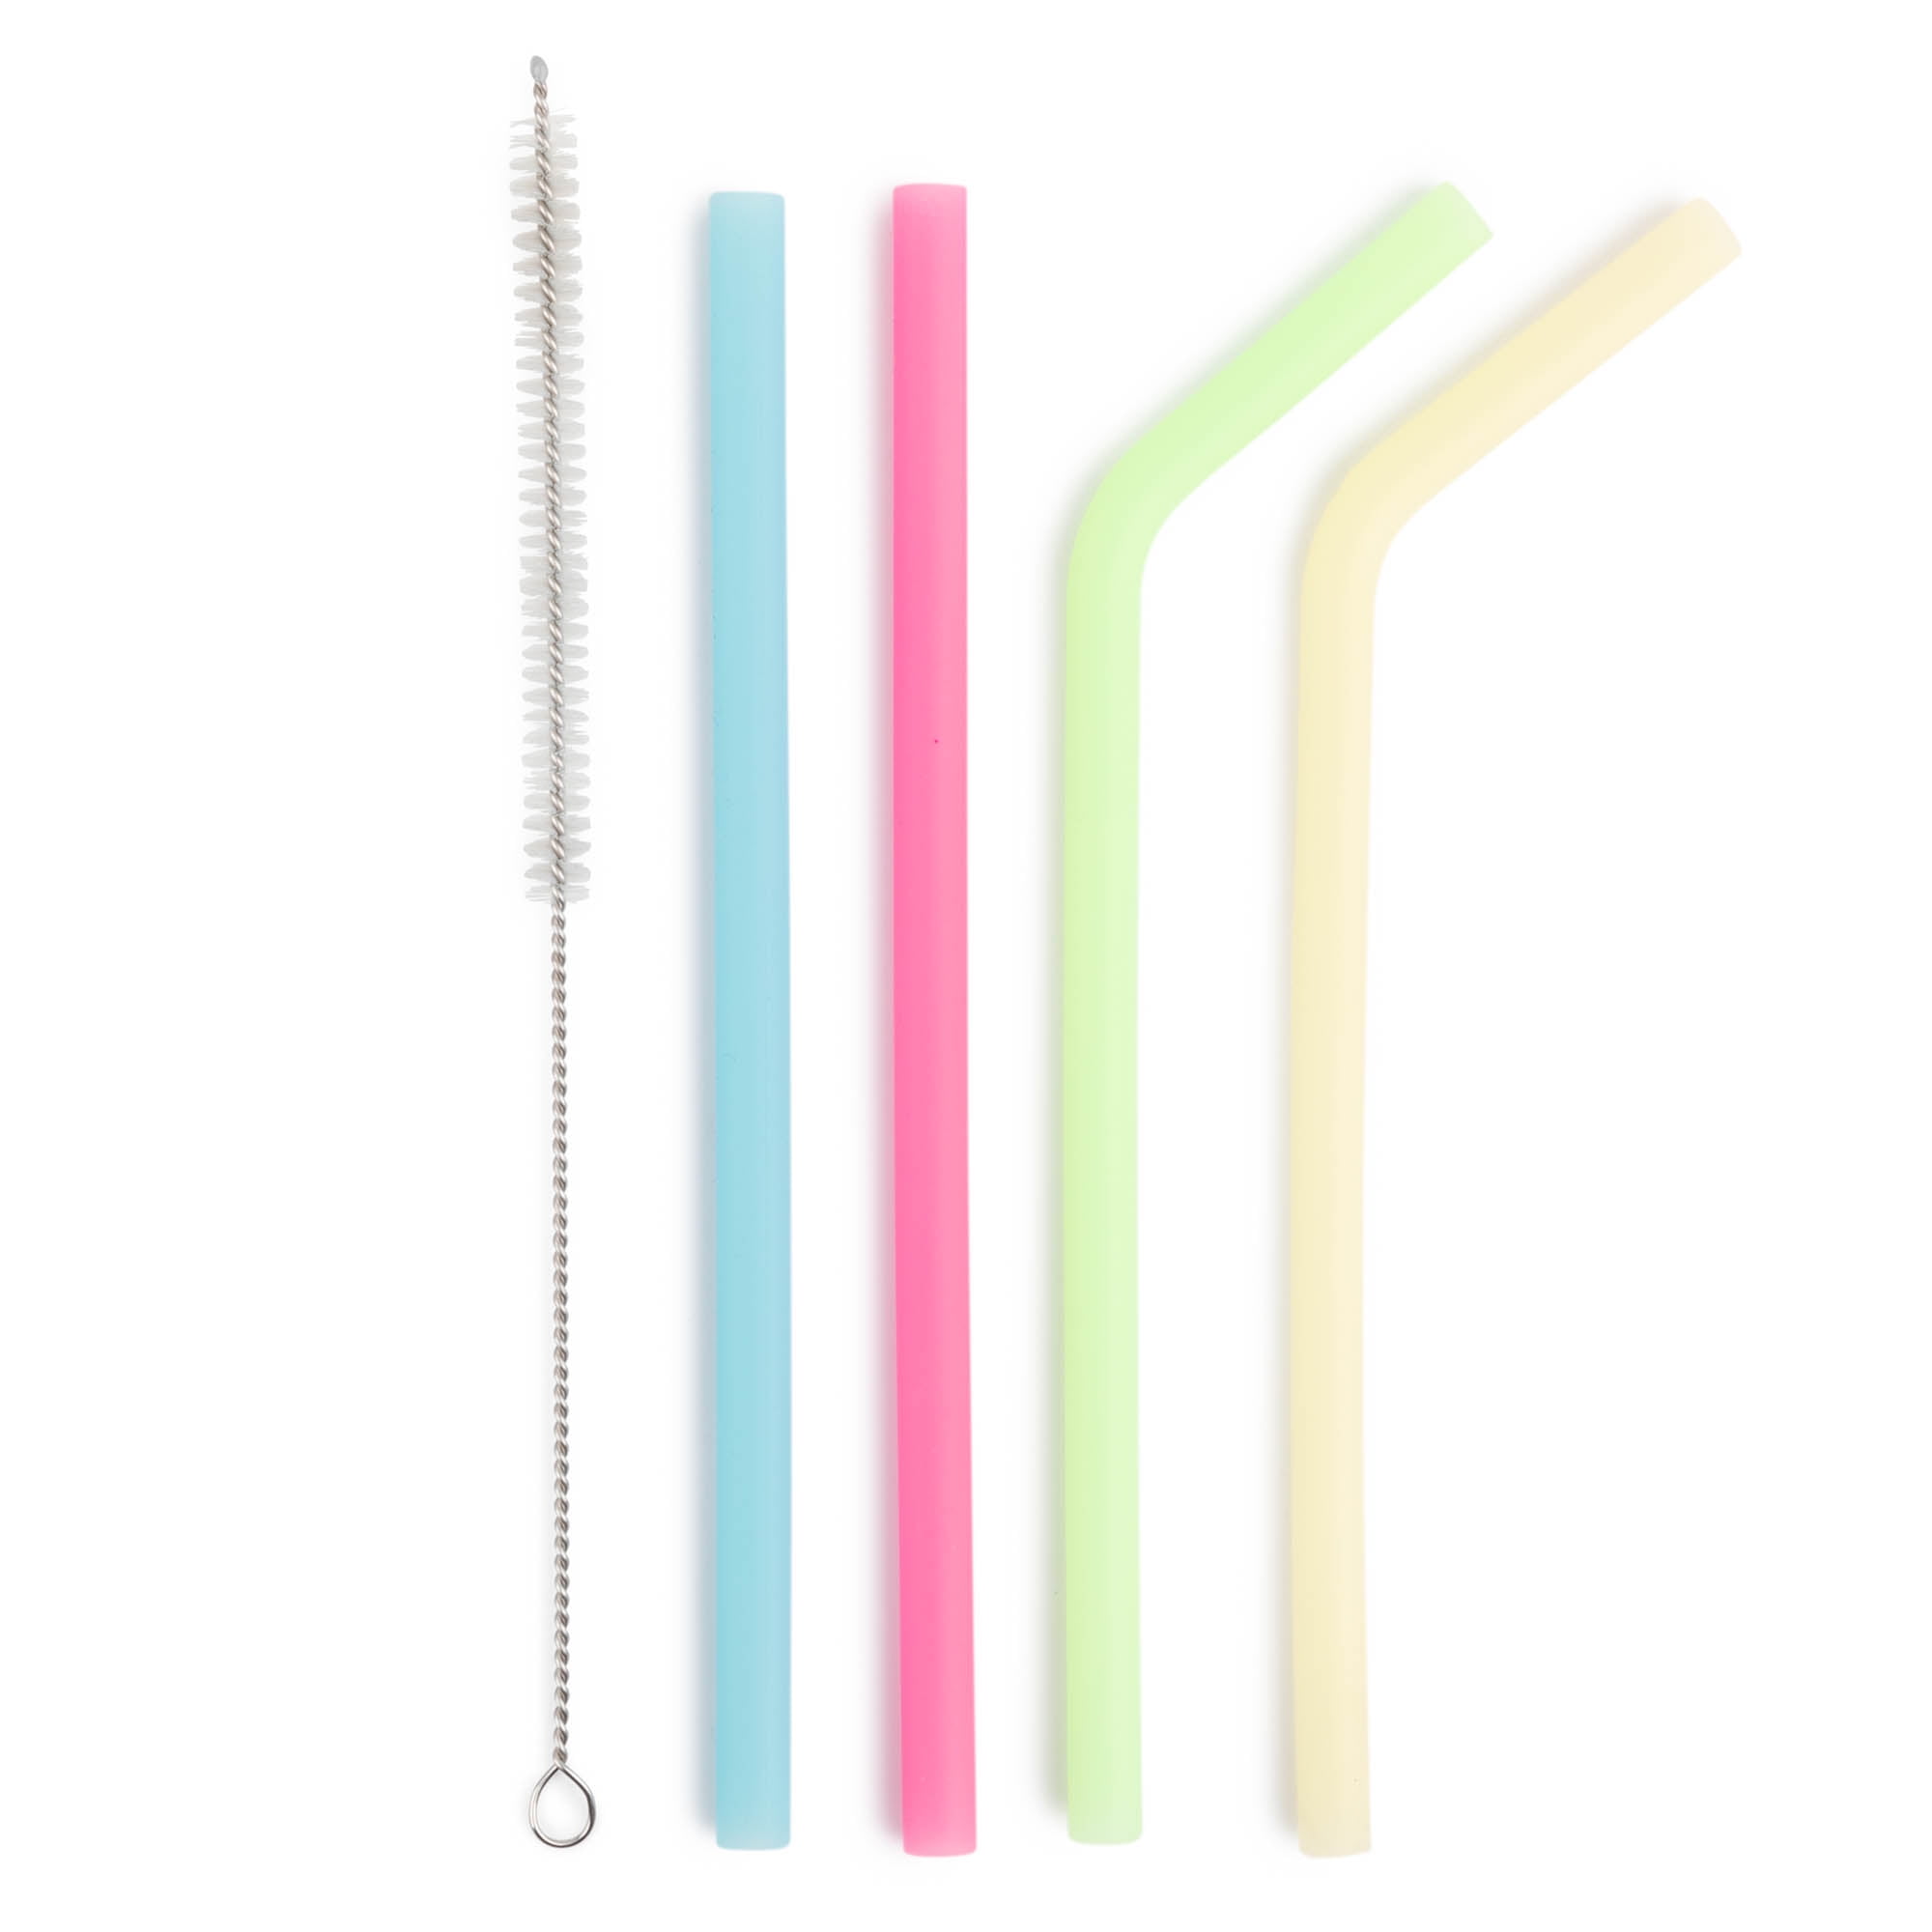 YUPHOO Plastic Straw Dispenser 8 Inch Drinking Straw Holder Pop Up Straw  Lid Organizer for Bar Straws, Kids Straws, Stir Sticks, Short Straws